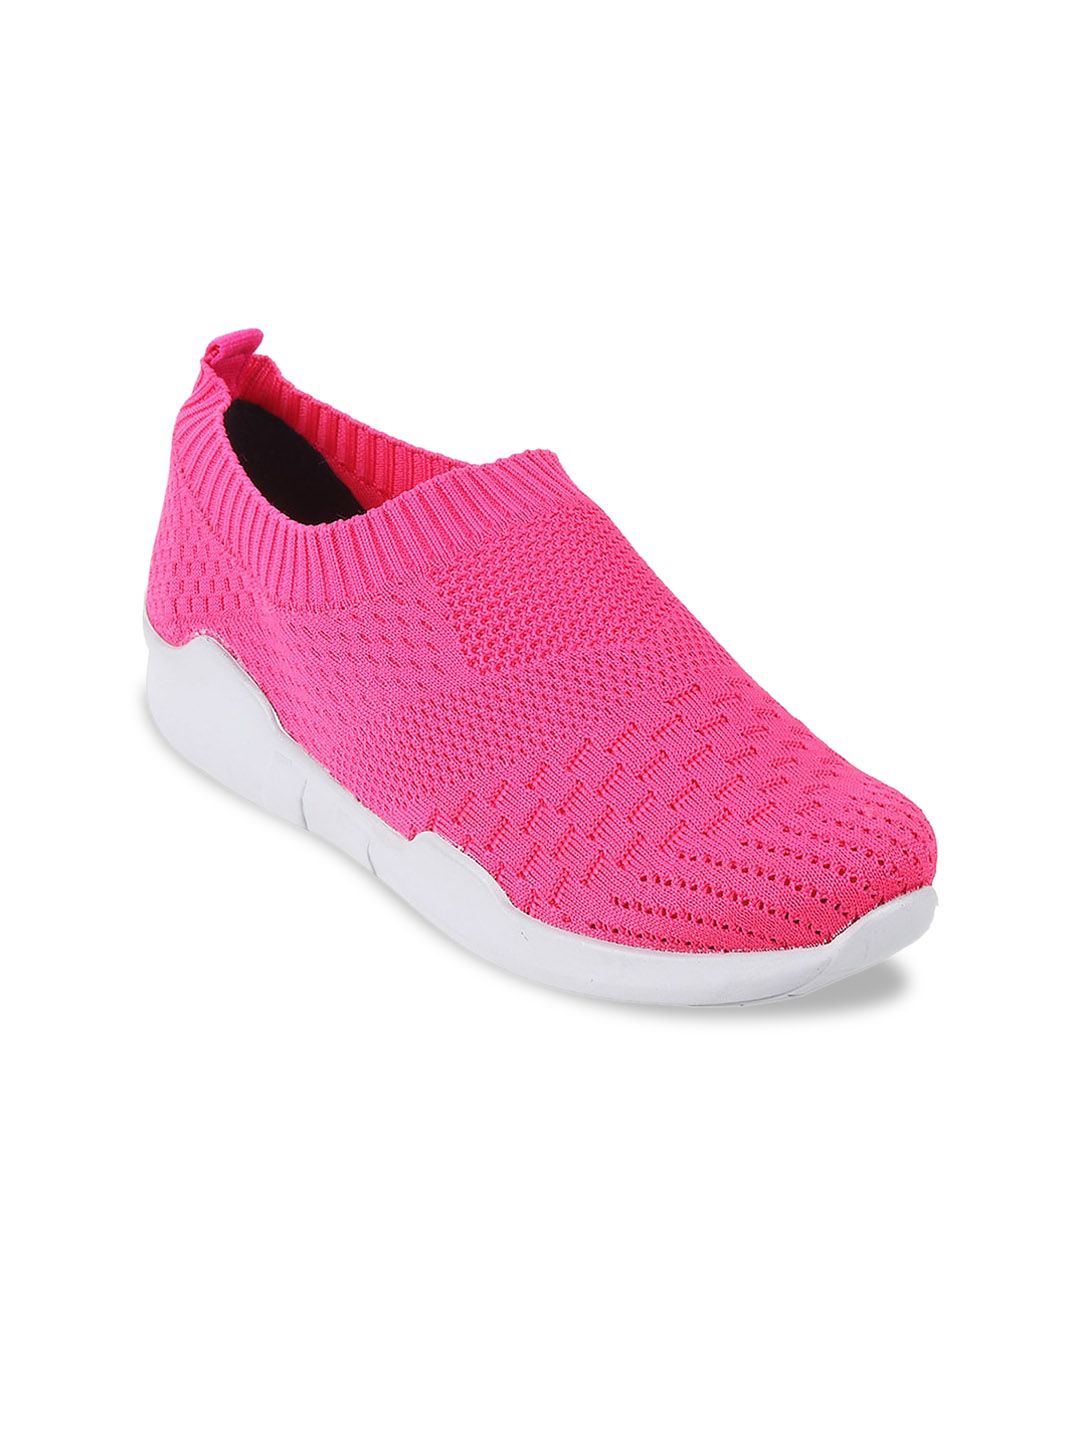 WALKWAY by Metro Women Pink Woven Design Slip-On Sneakers Price in India